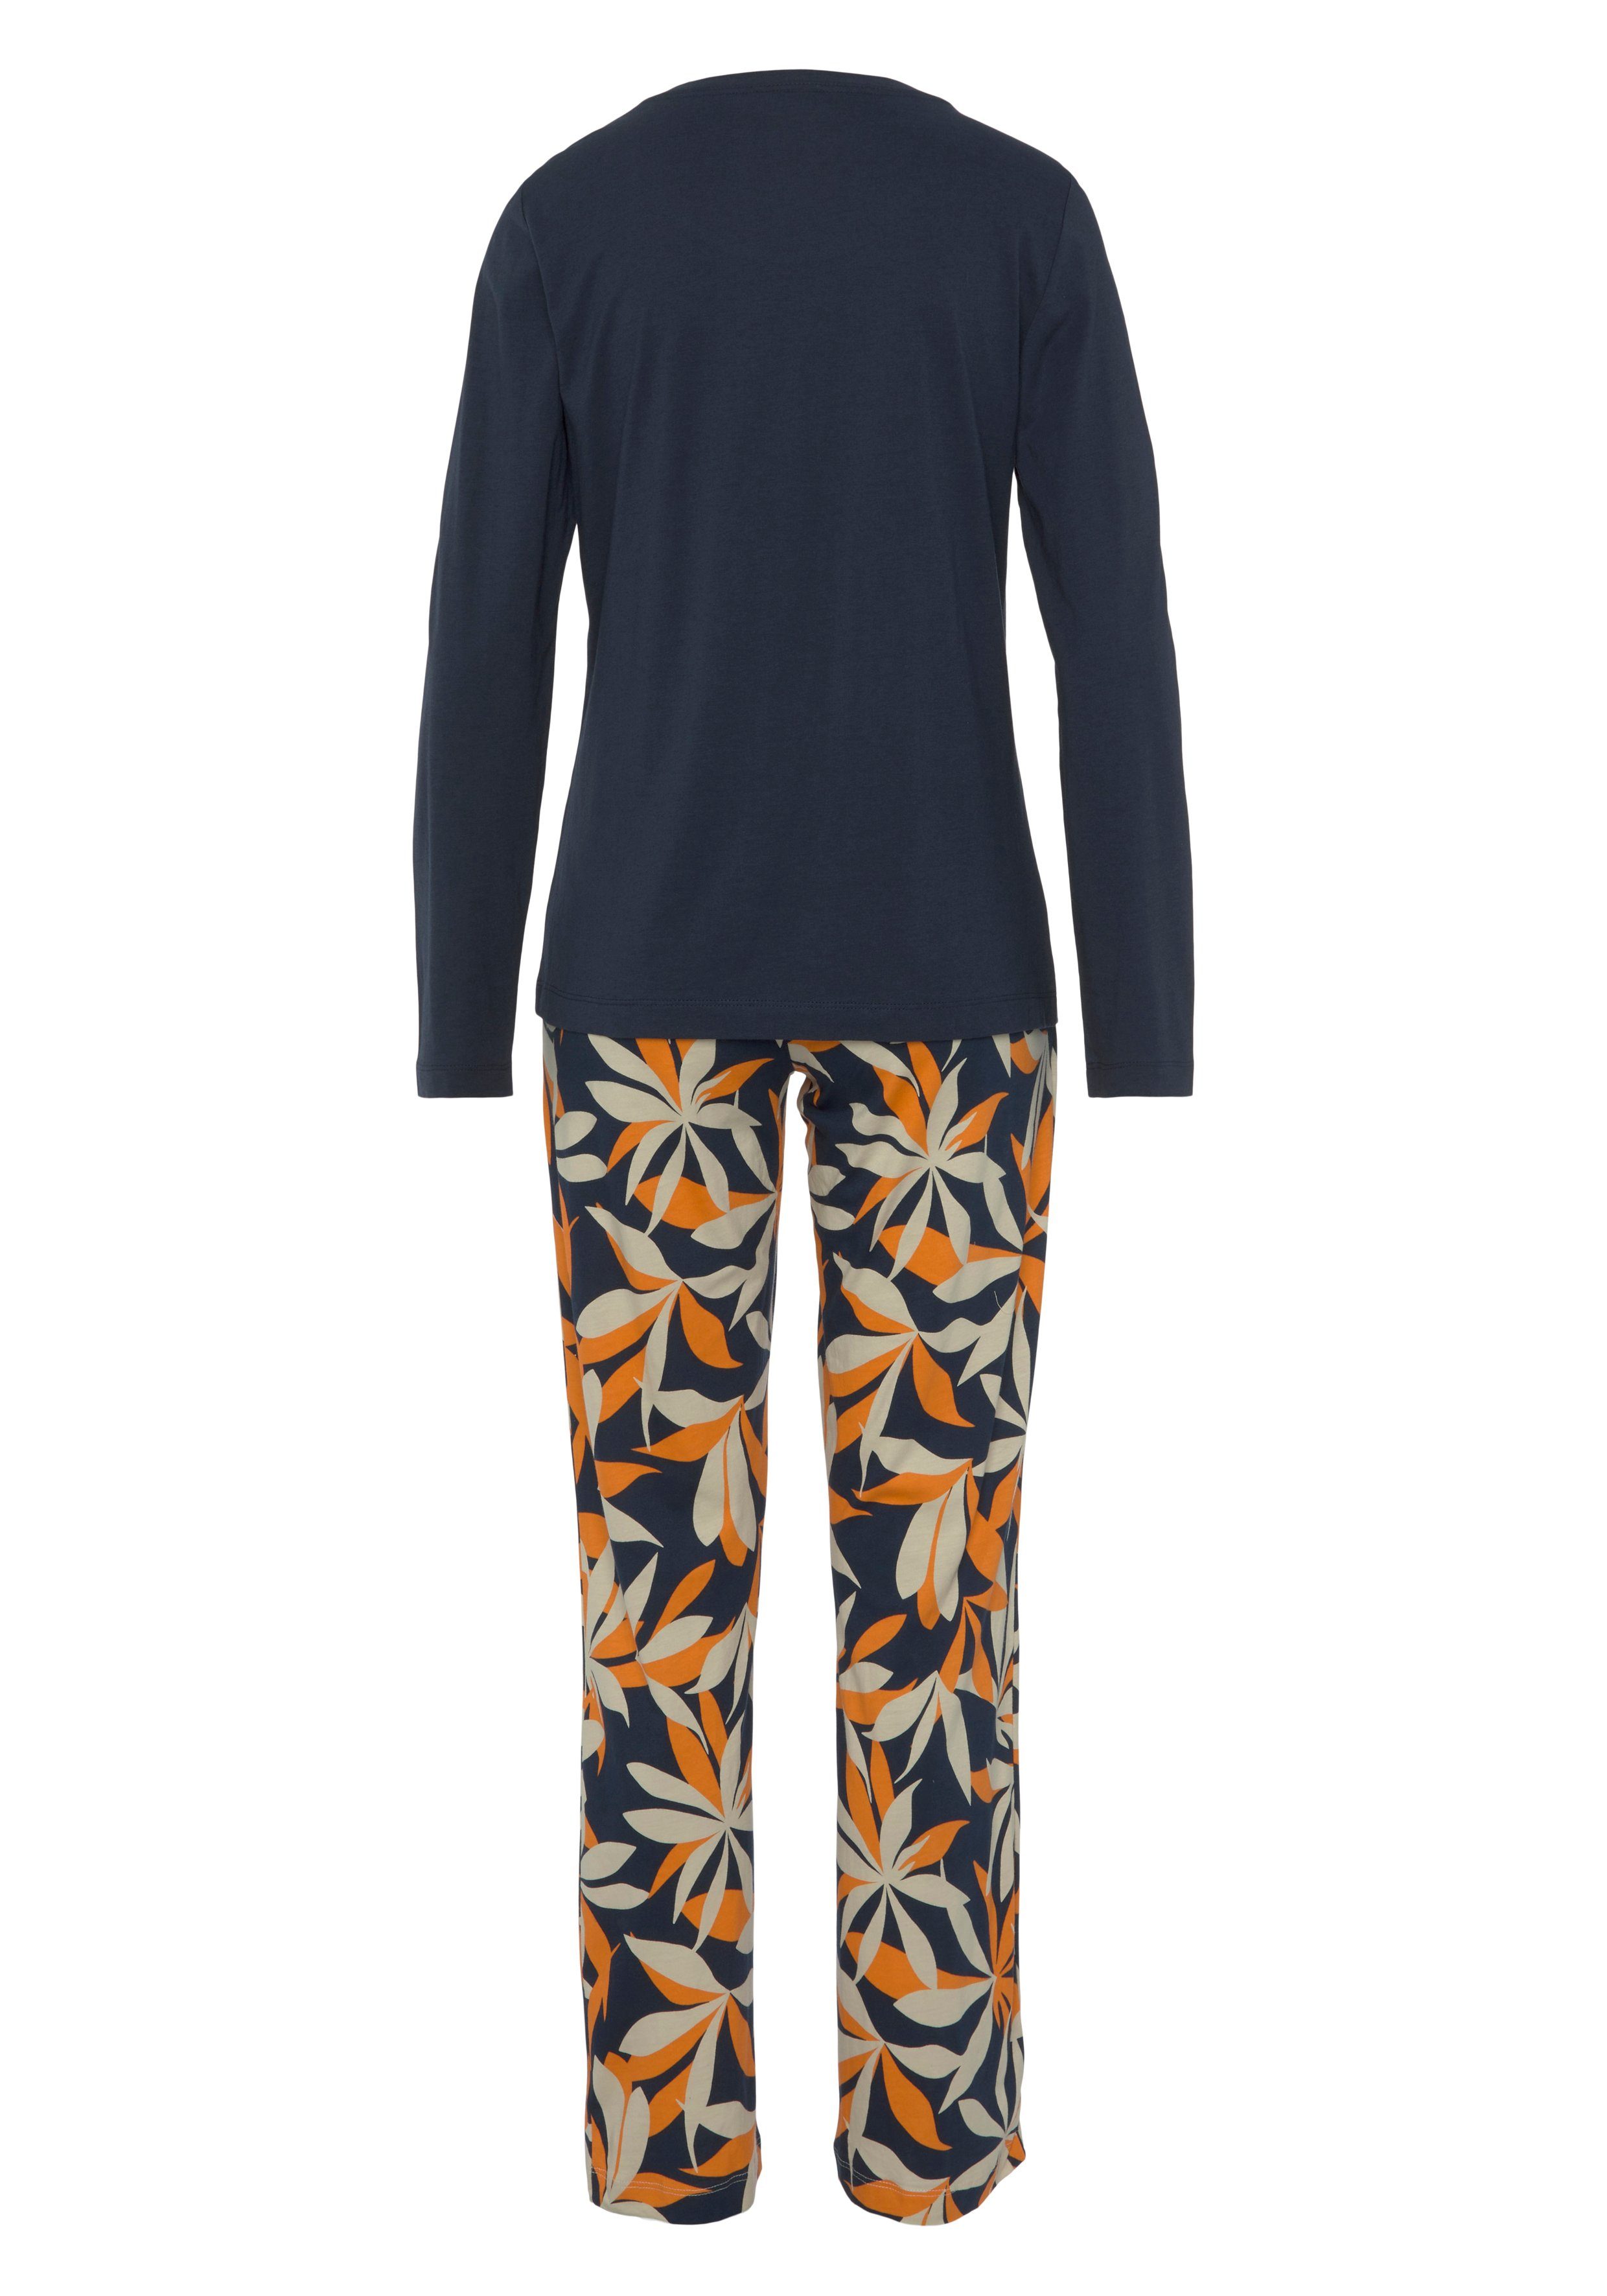 tlg) s.Oliver Pyjama (2 buntem mit Blätterdruck